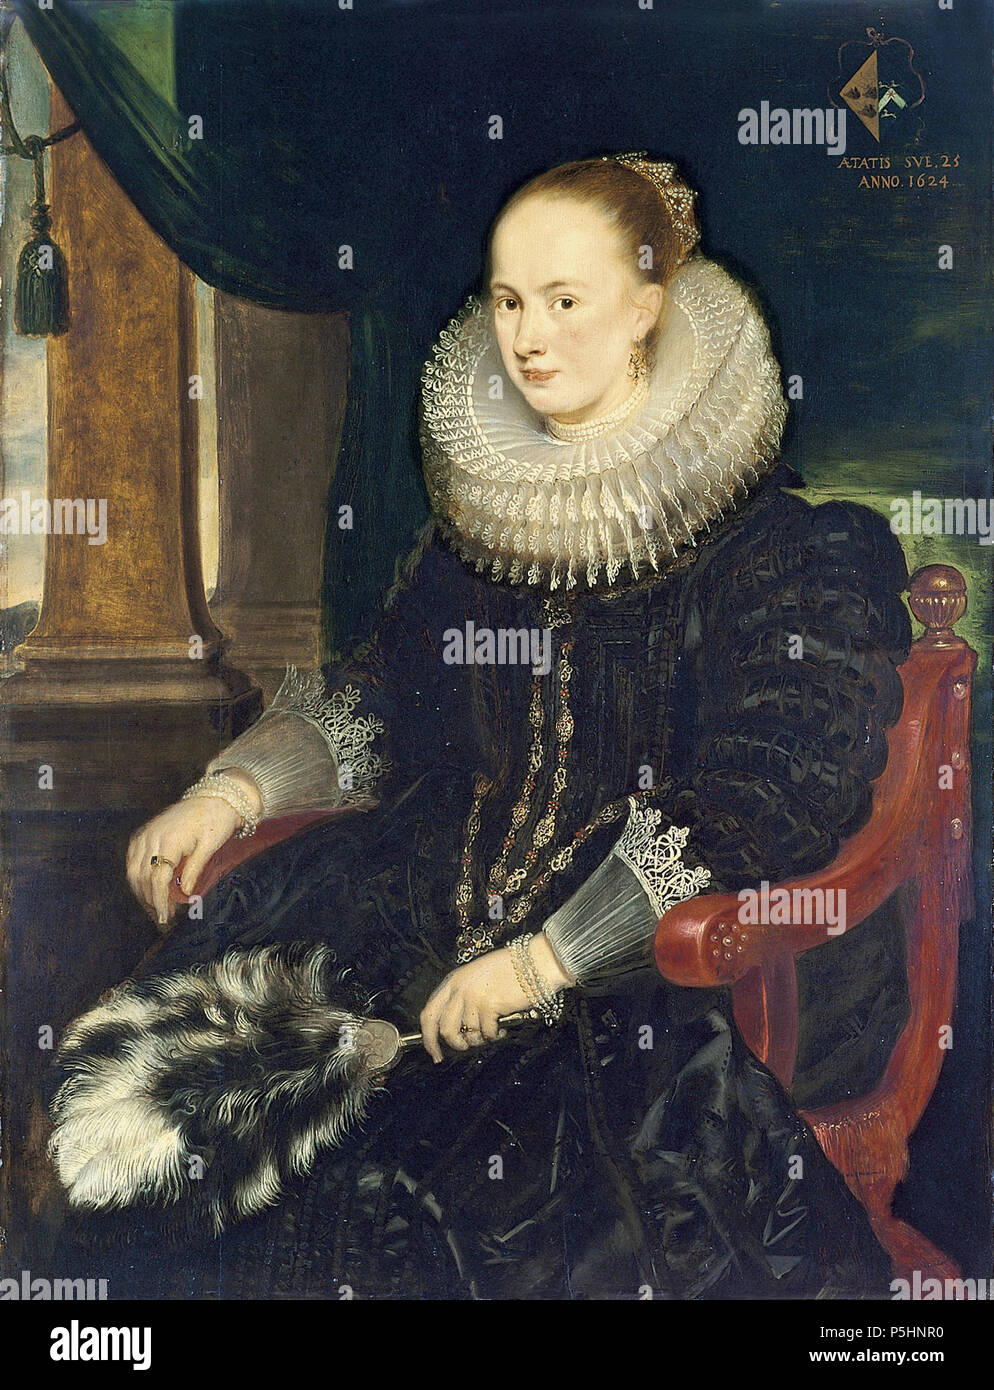 English: Portrait of Antonia Canis  1624. N/A 18 Cornelis De Vos - Portrait of Antonia Canis Stock Photo